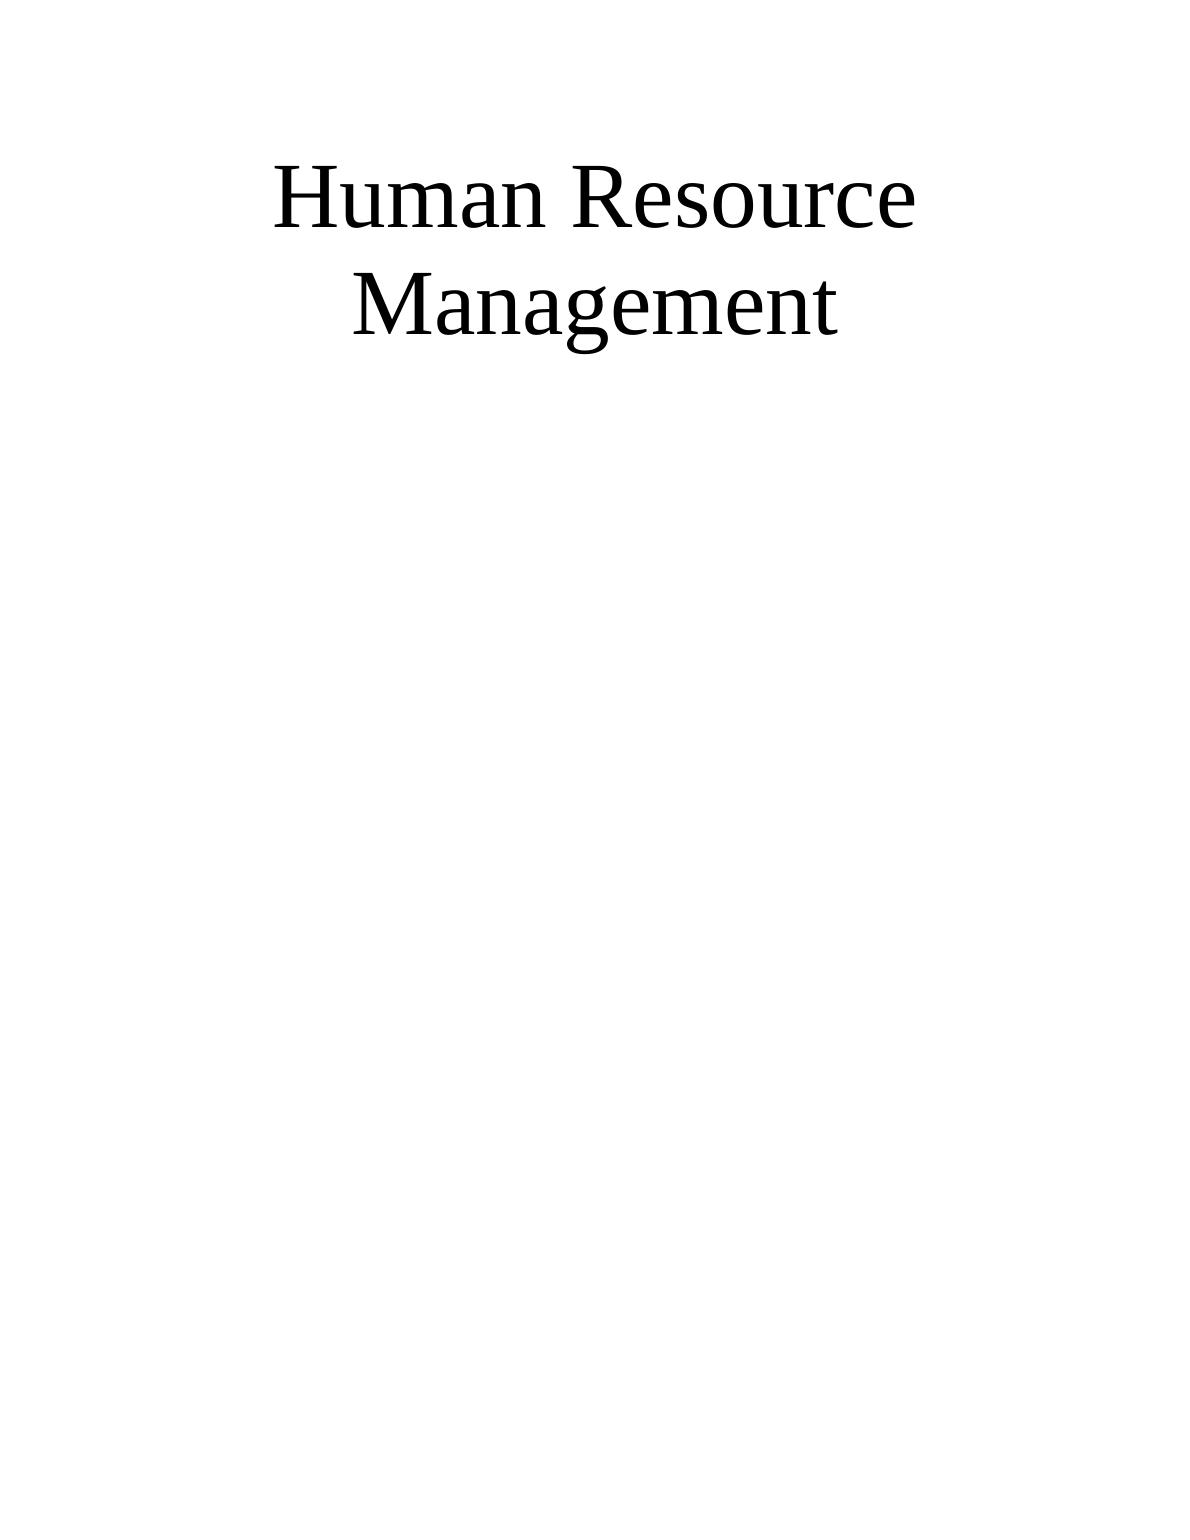 Human Resource Management Purpose - M&S_1